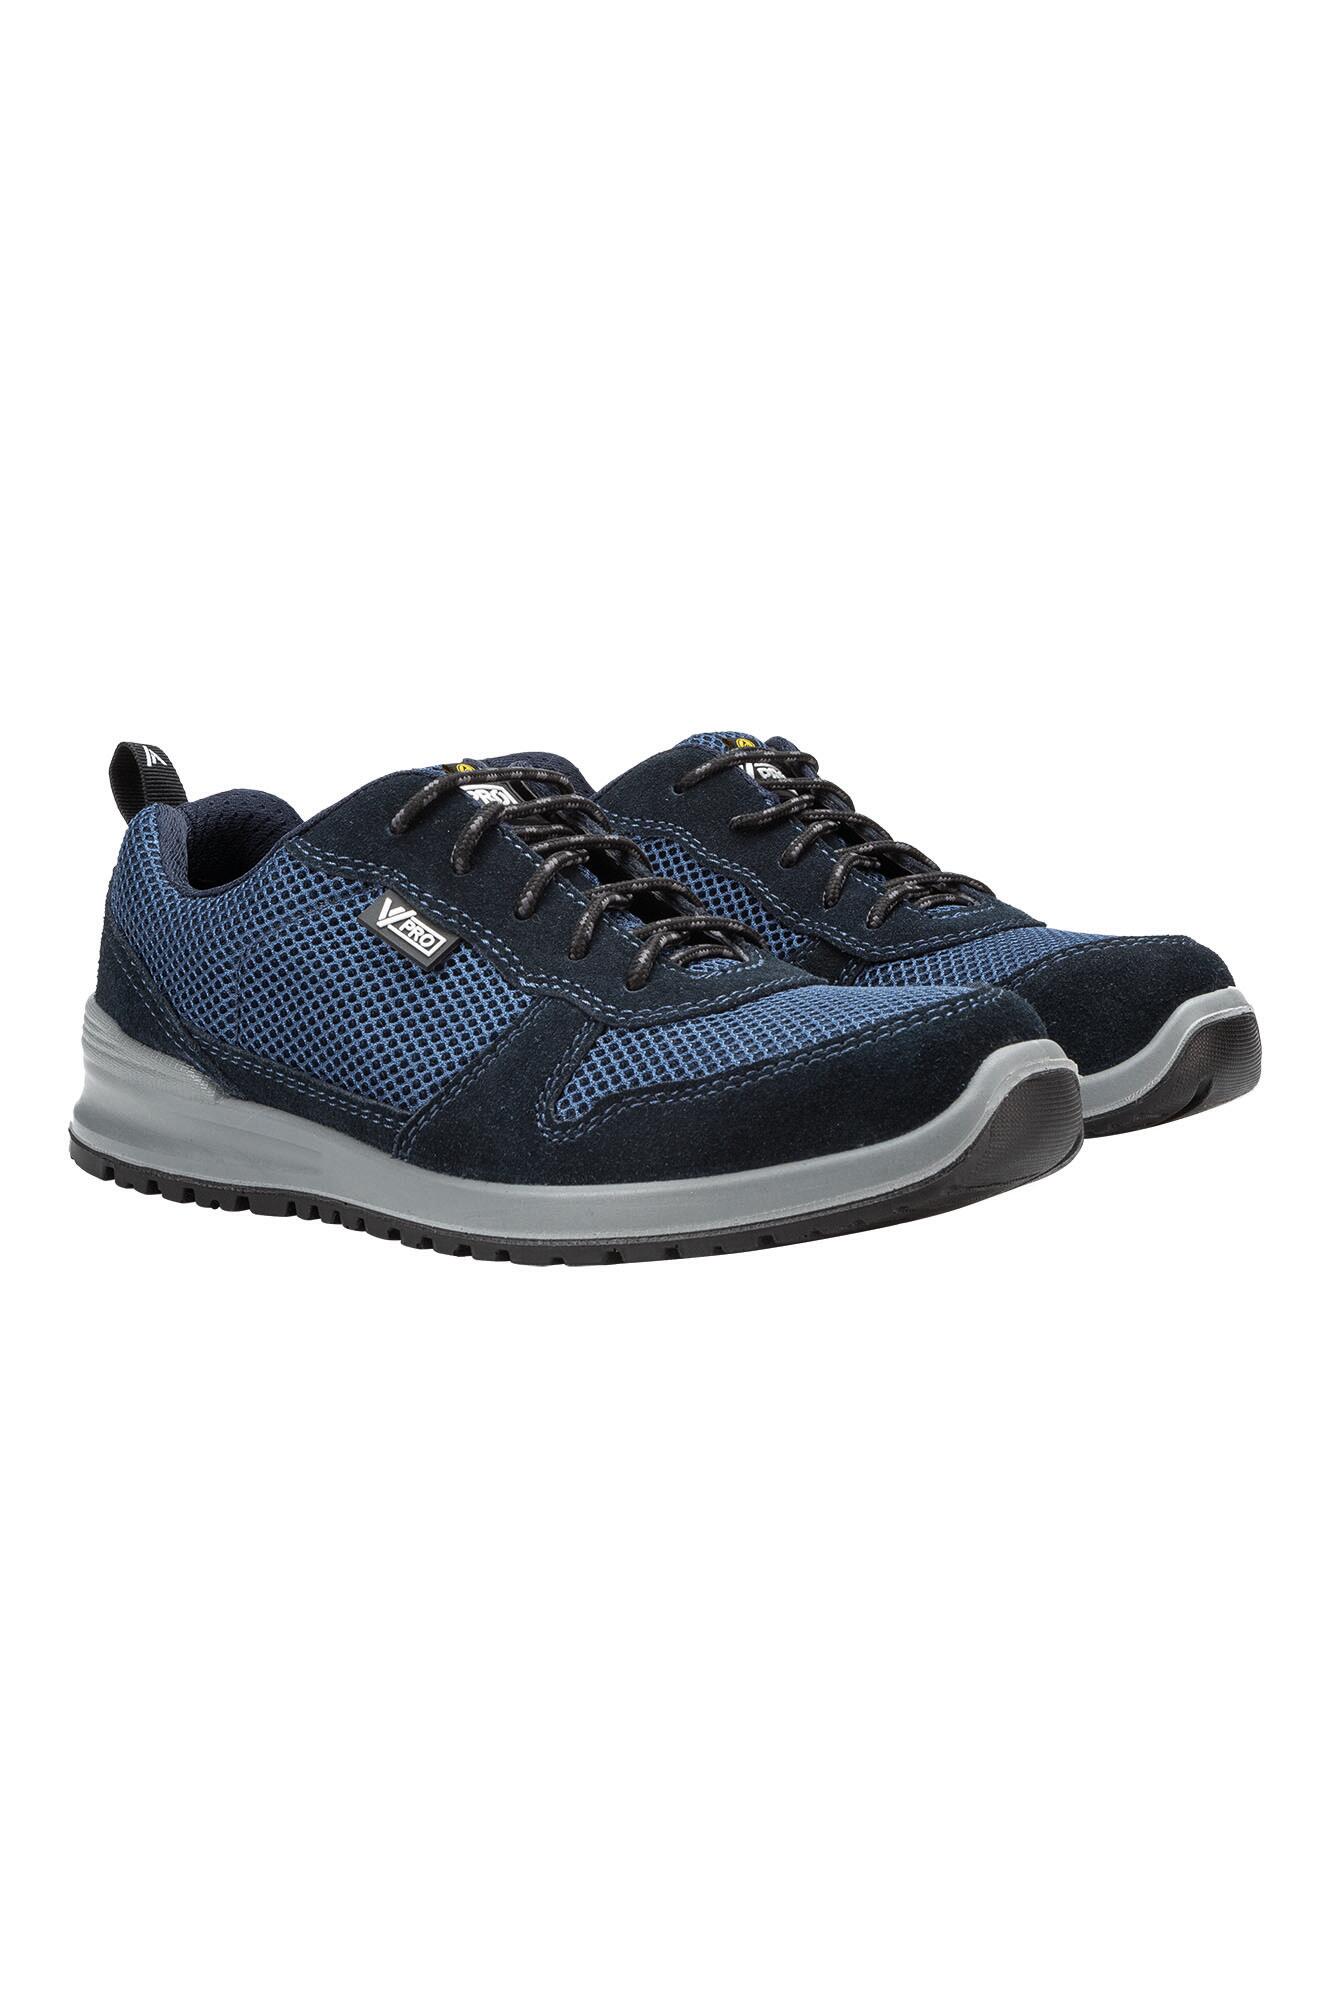 Zapatos de seguridad metal free s1psrc azul navy t43